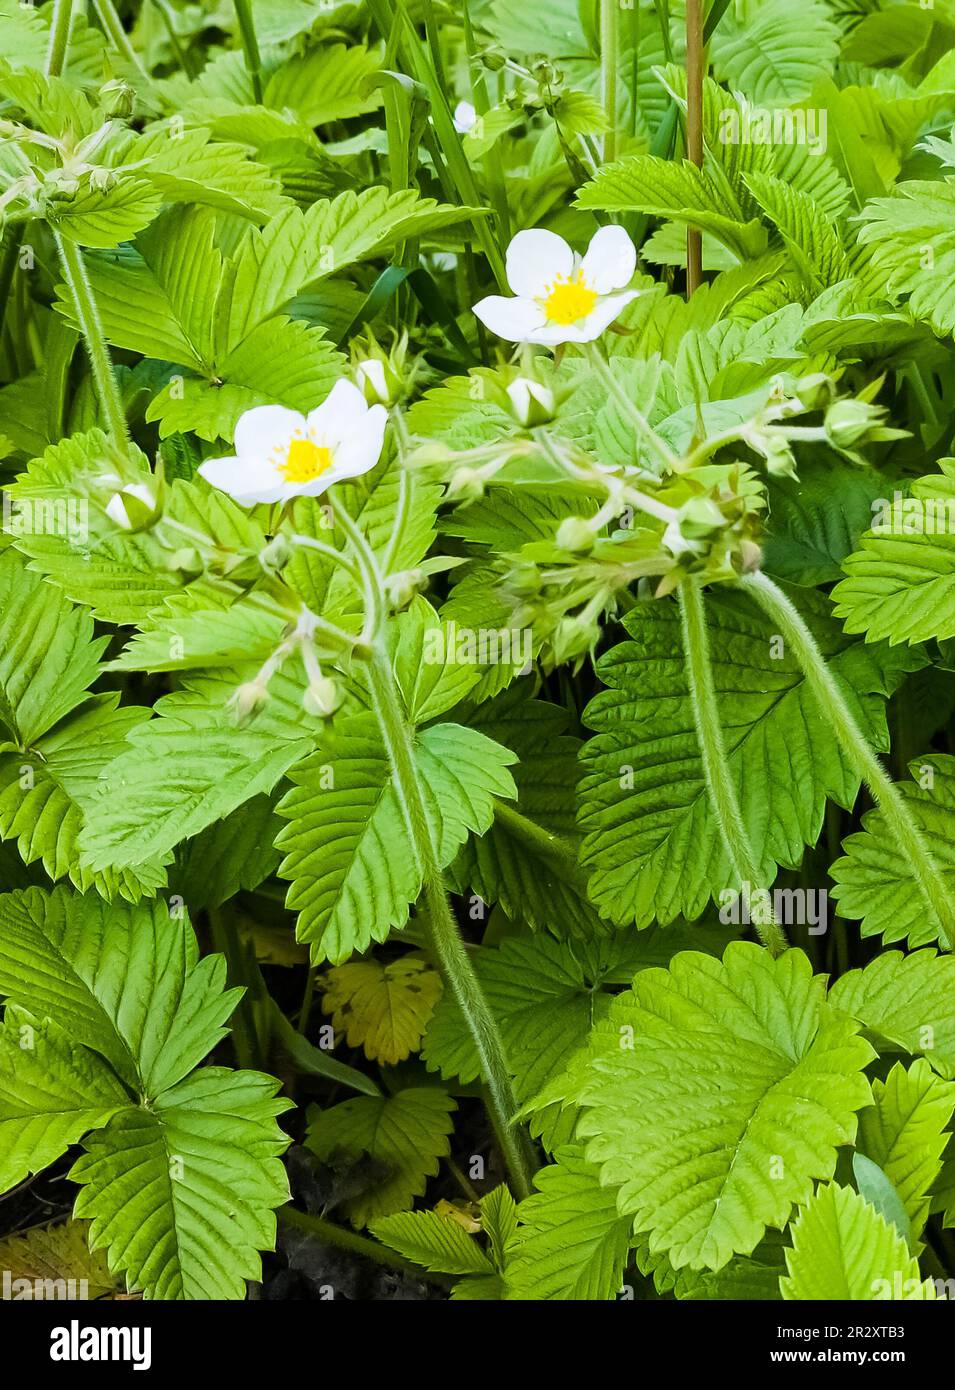 White flowers of wild strawberry in green grass. Latin name Fragaria L. Stock Photo